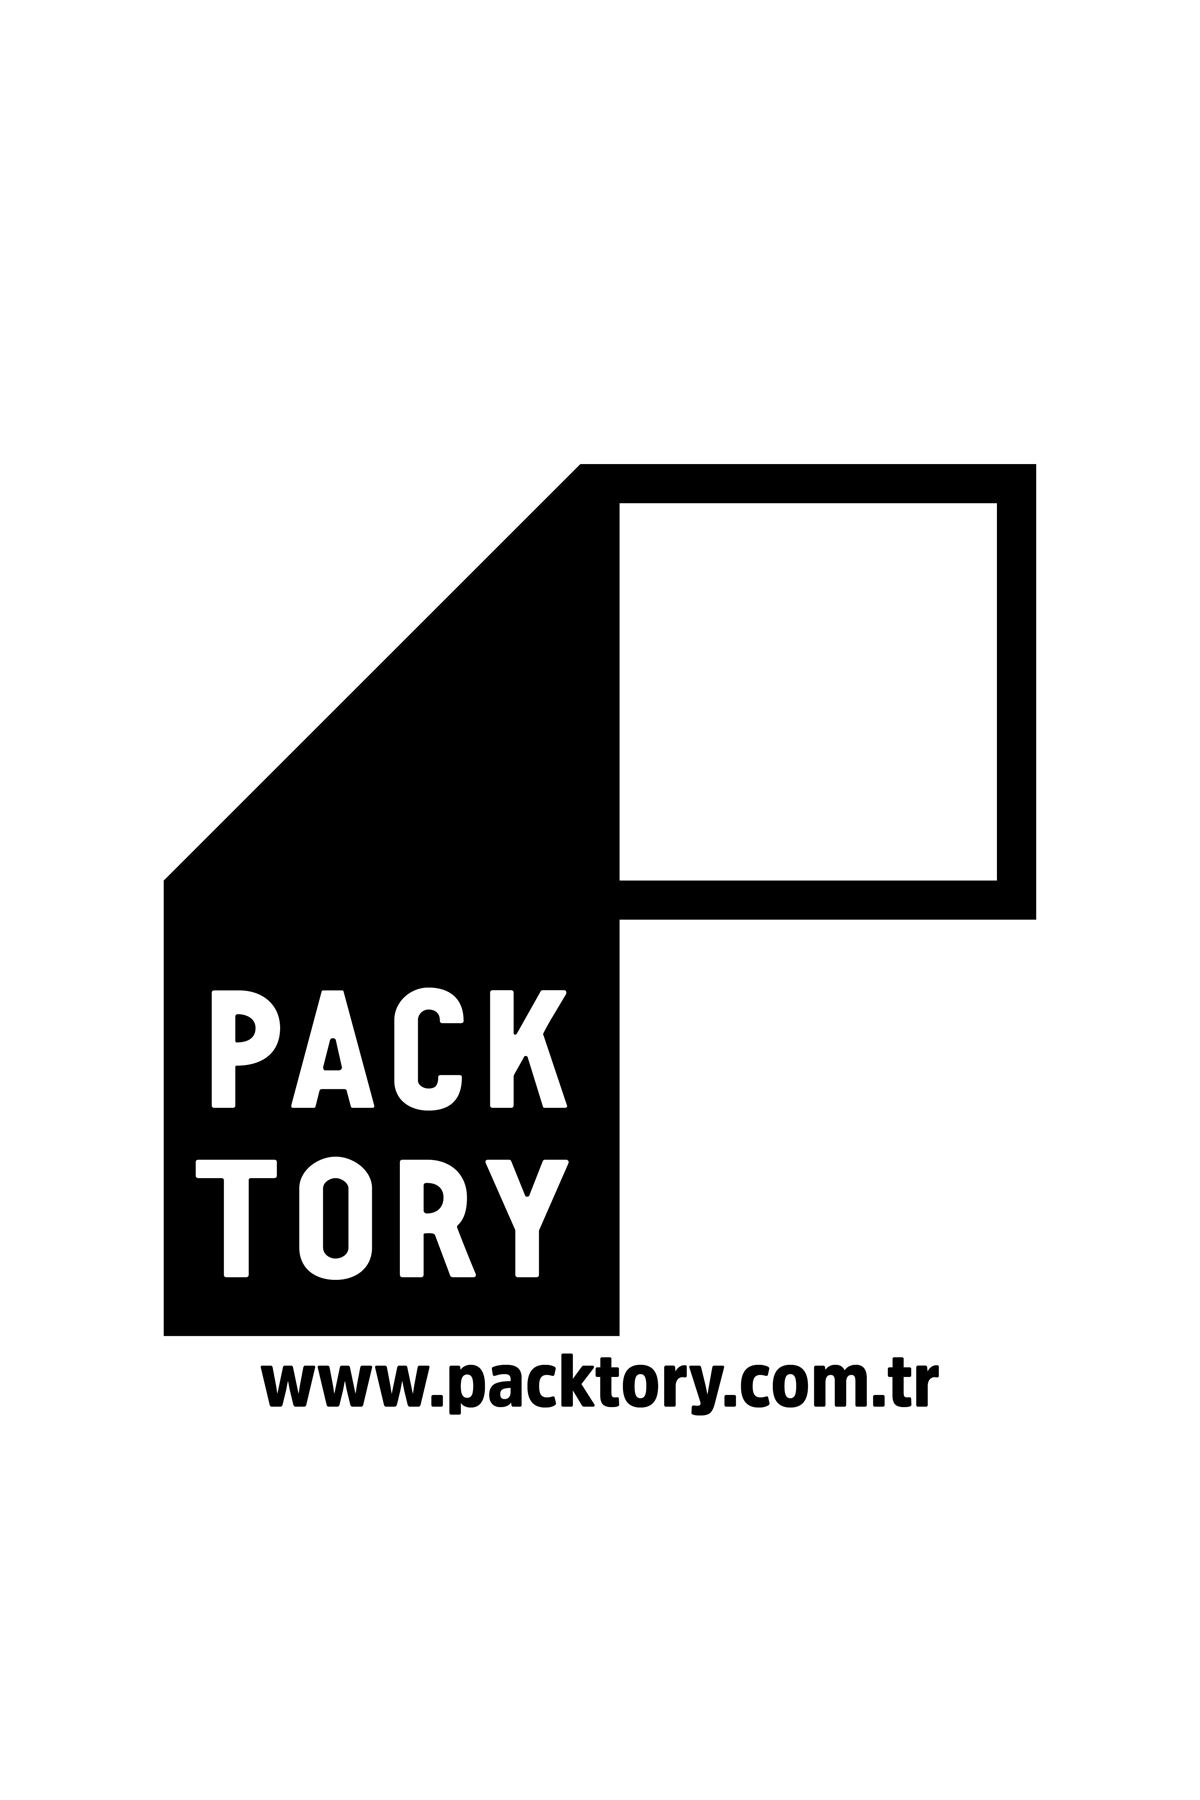 Packtory 10 x 34 + 3 Cm  Aluminyum Yan Körüklü Quadro Ambalaj 500 Gr. 100 Adet 